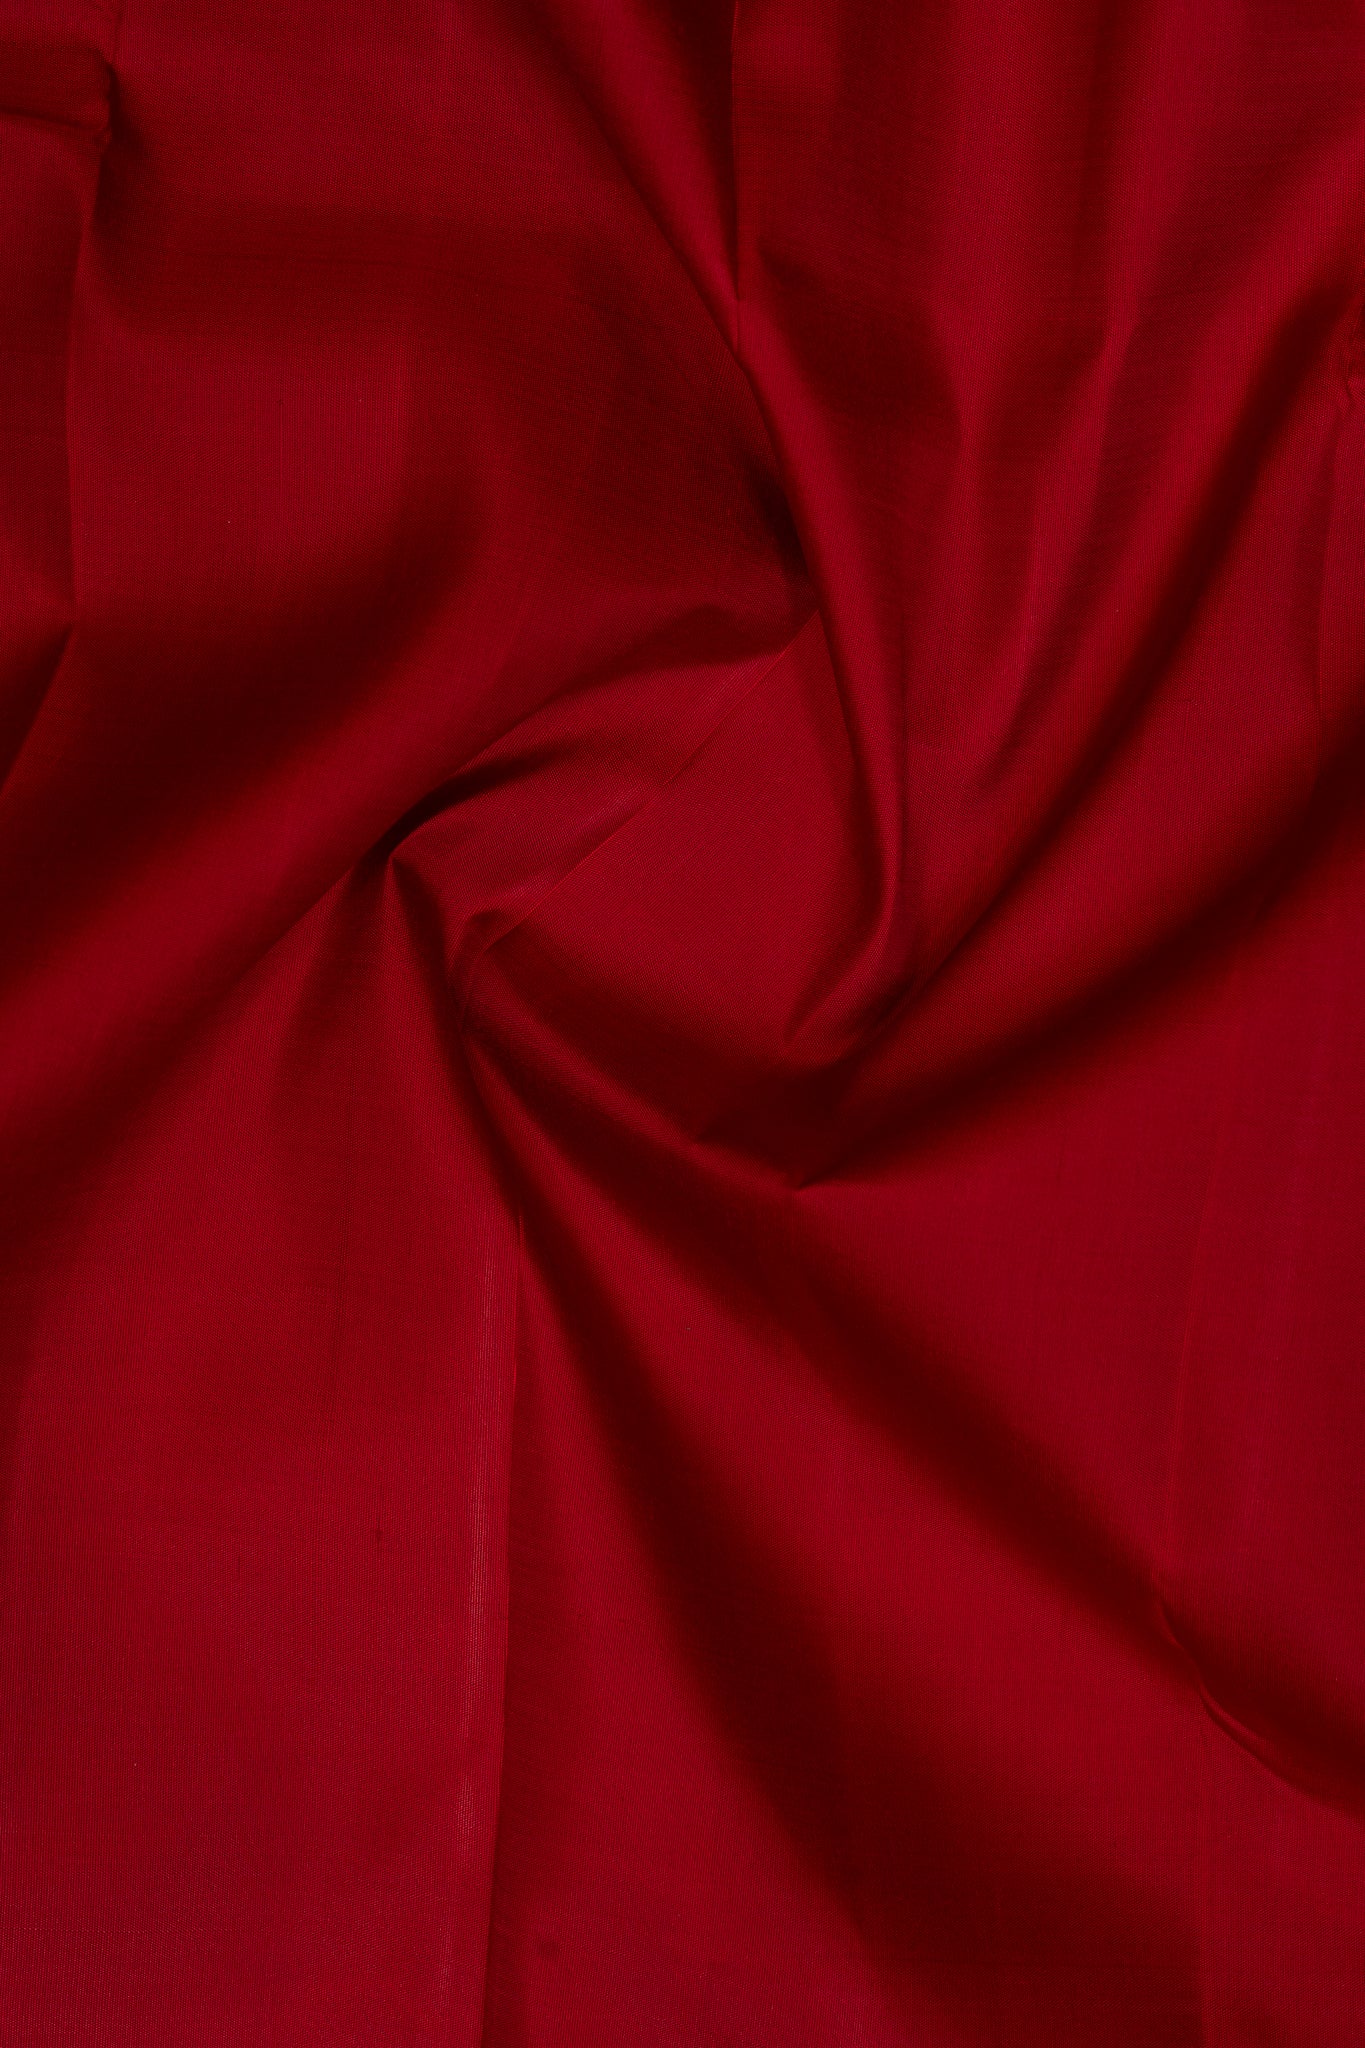 Ruby Red and Black Without Zari Kanchipuram Silk Saree - Clio Silks